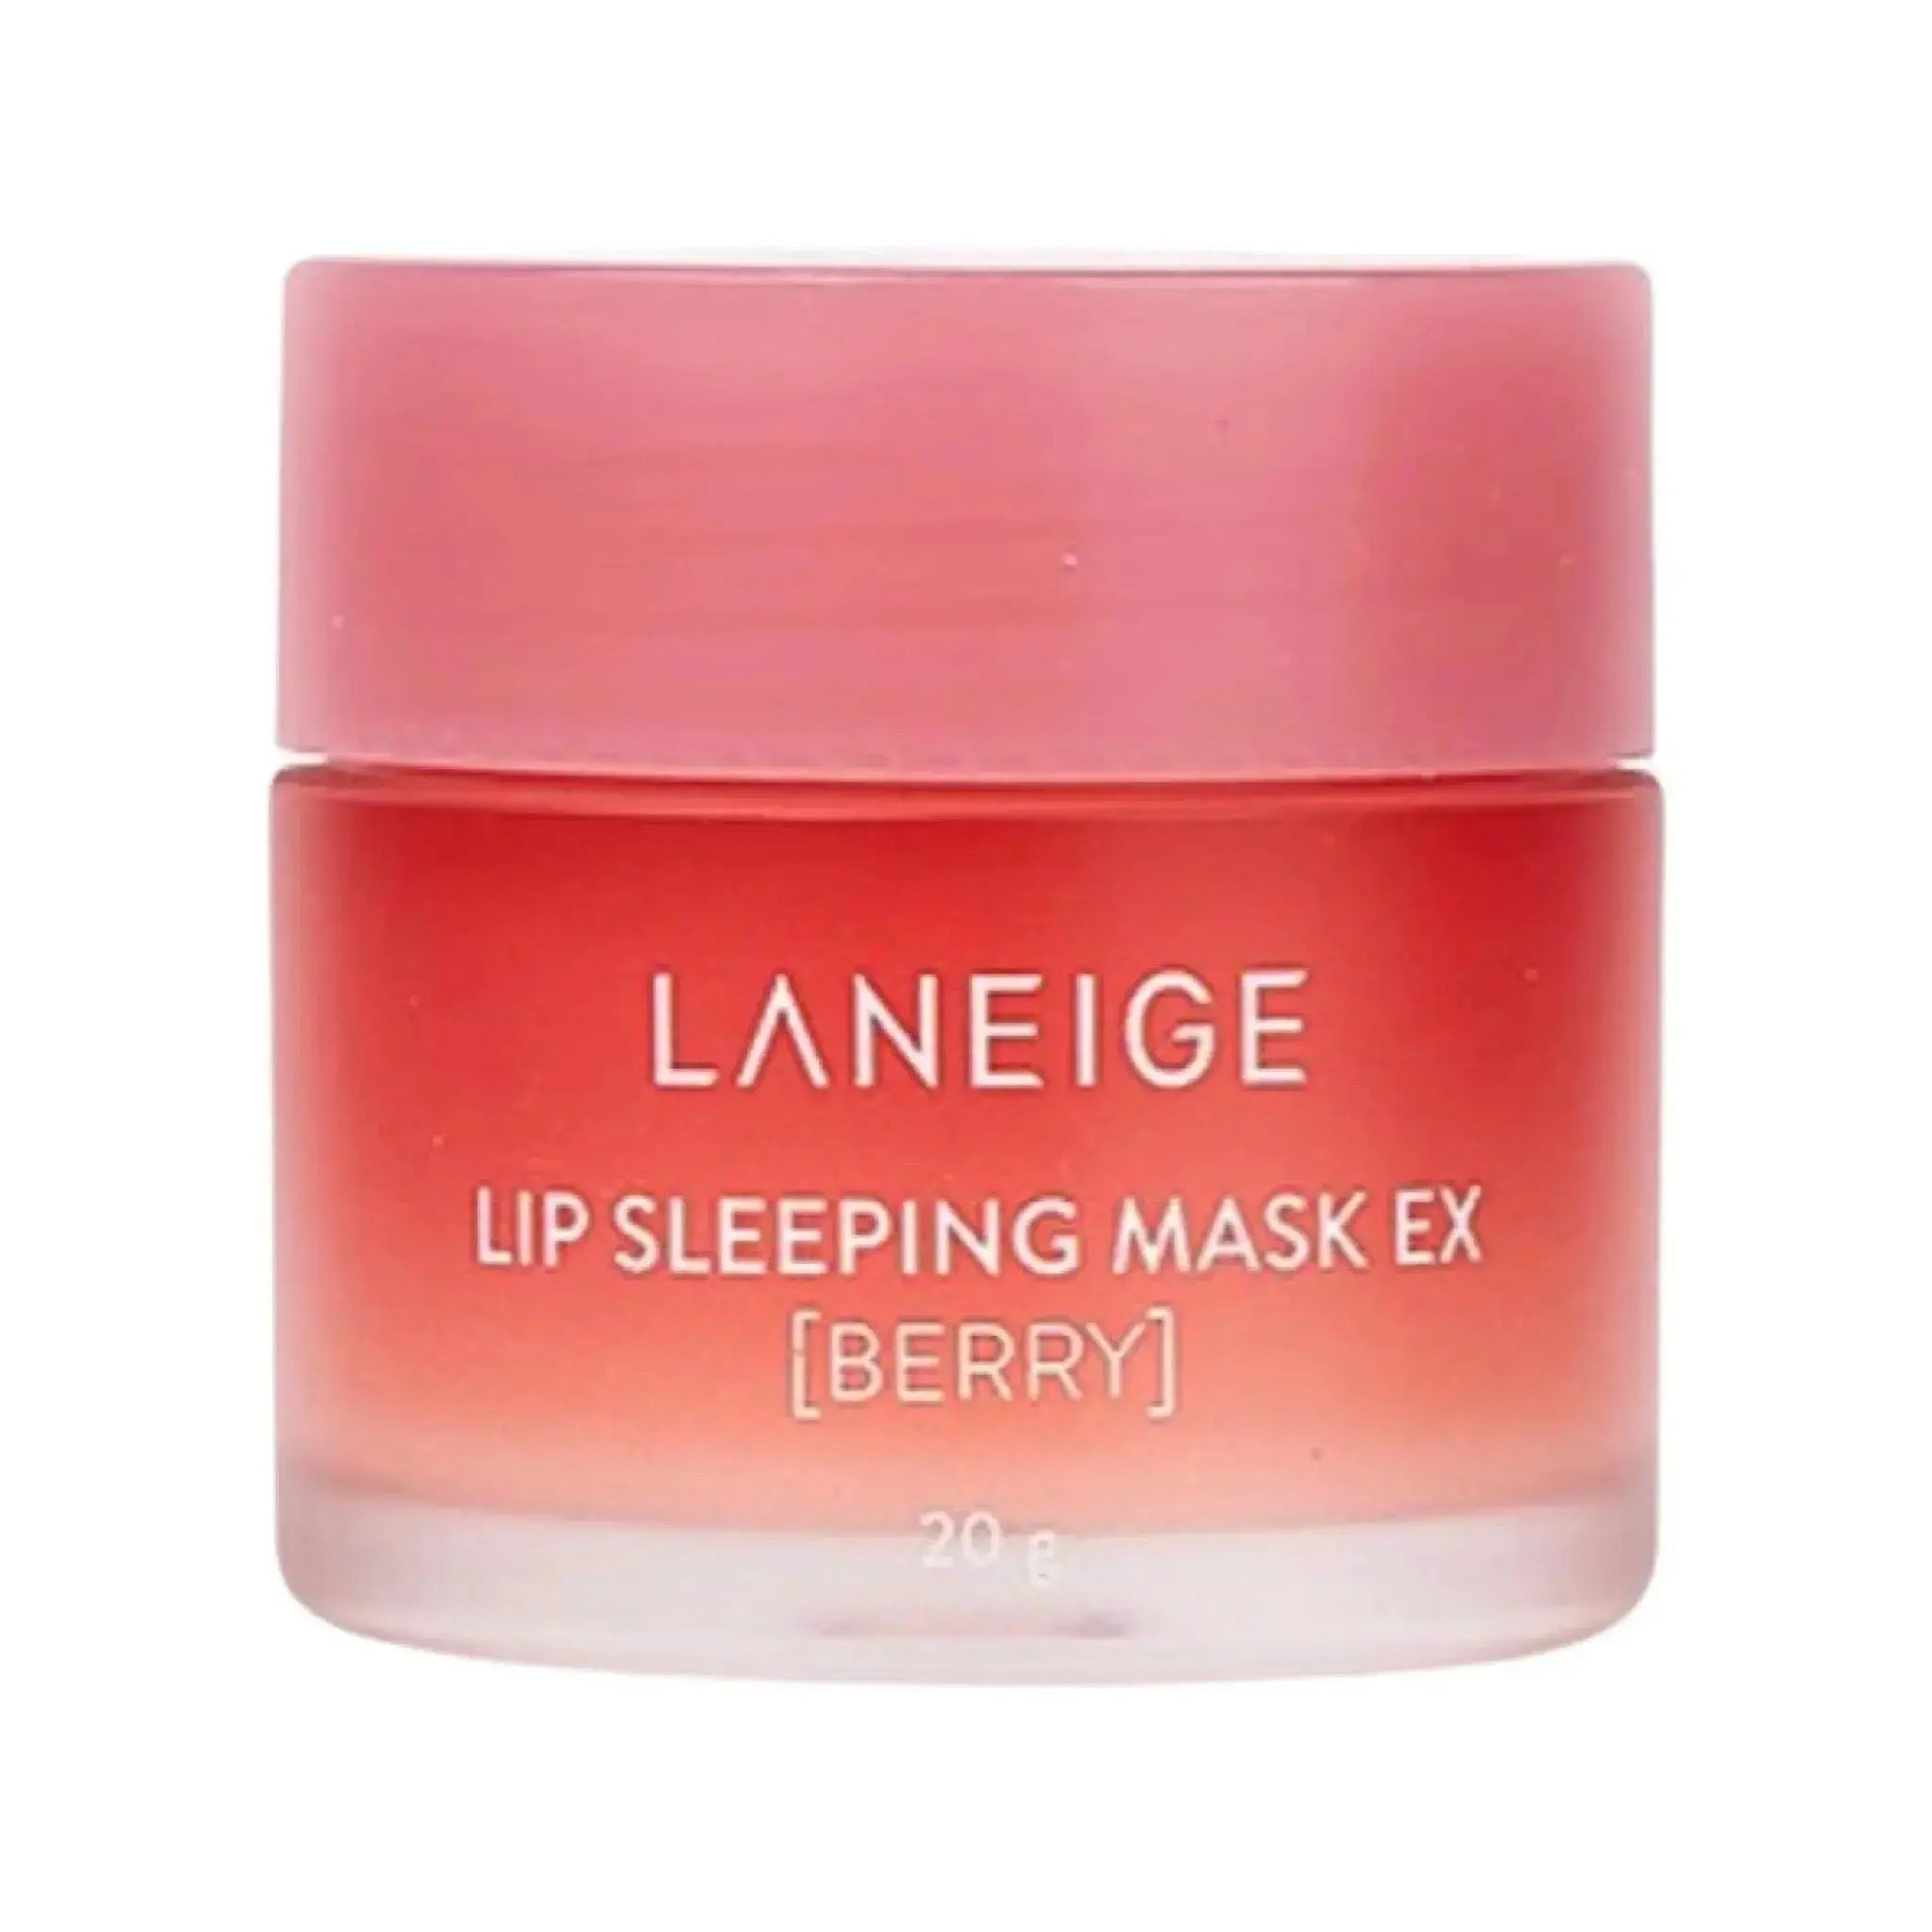 Copy of Laneige - Lip Sleeping Mask EX (Berry) 20g Laneige